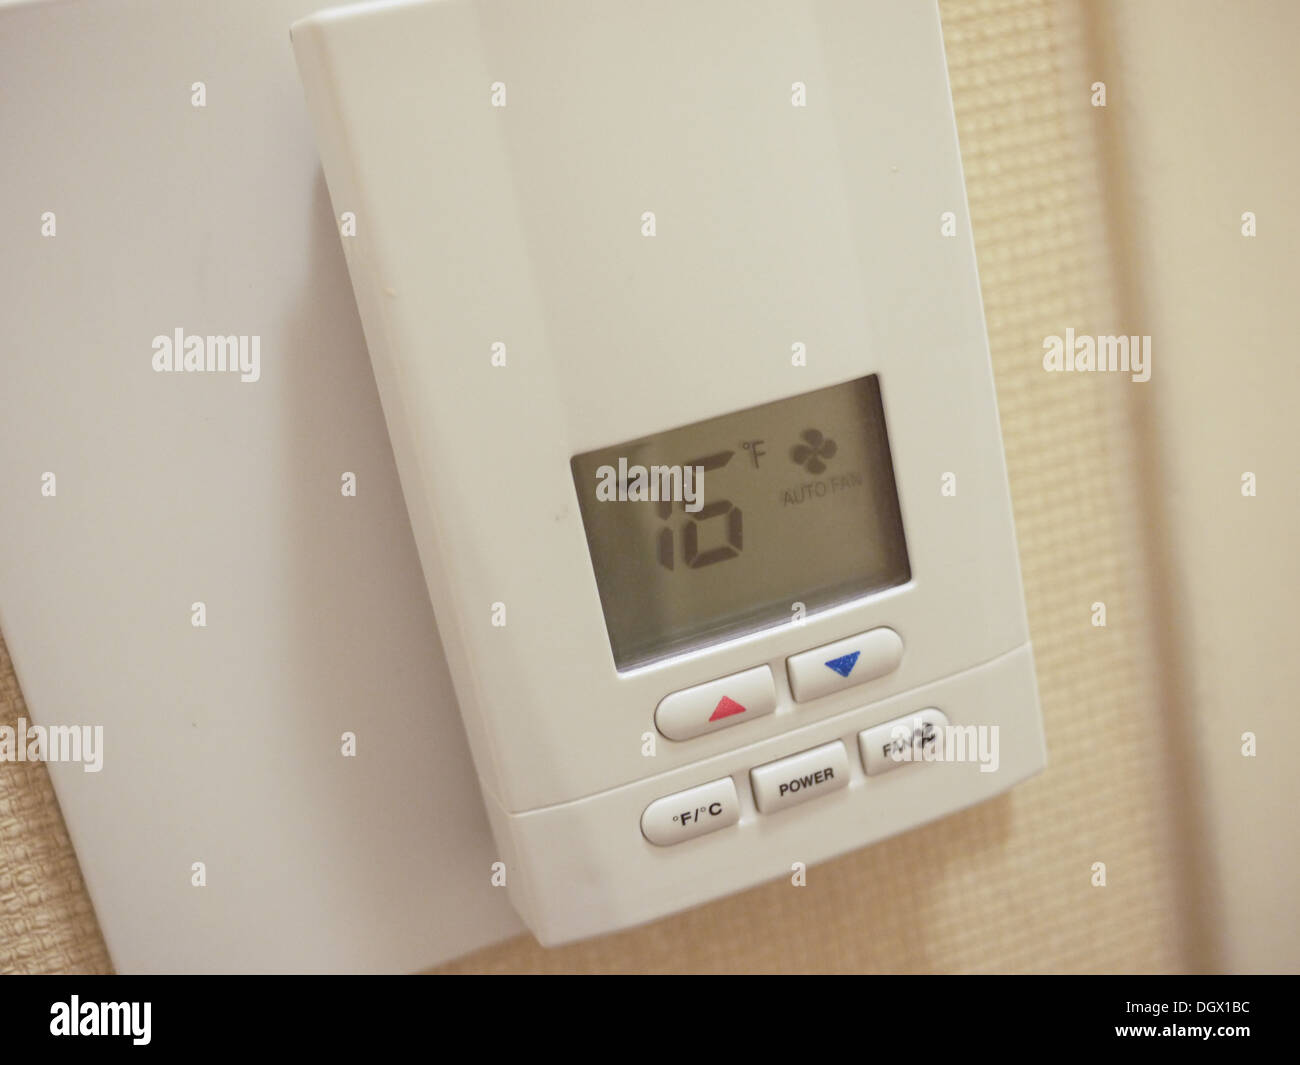 hotel thermostat 76 degrees fahrenheit Stock Photo